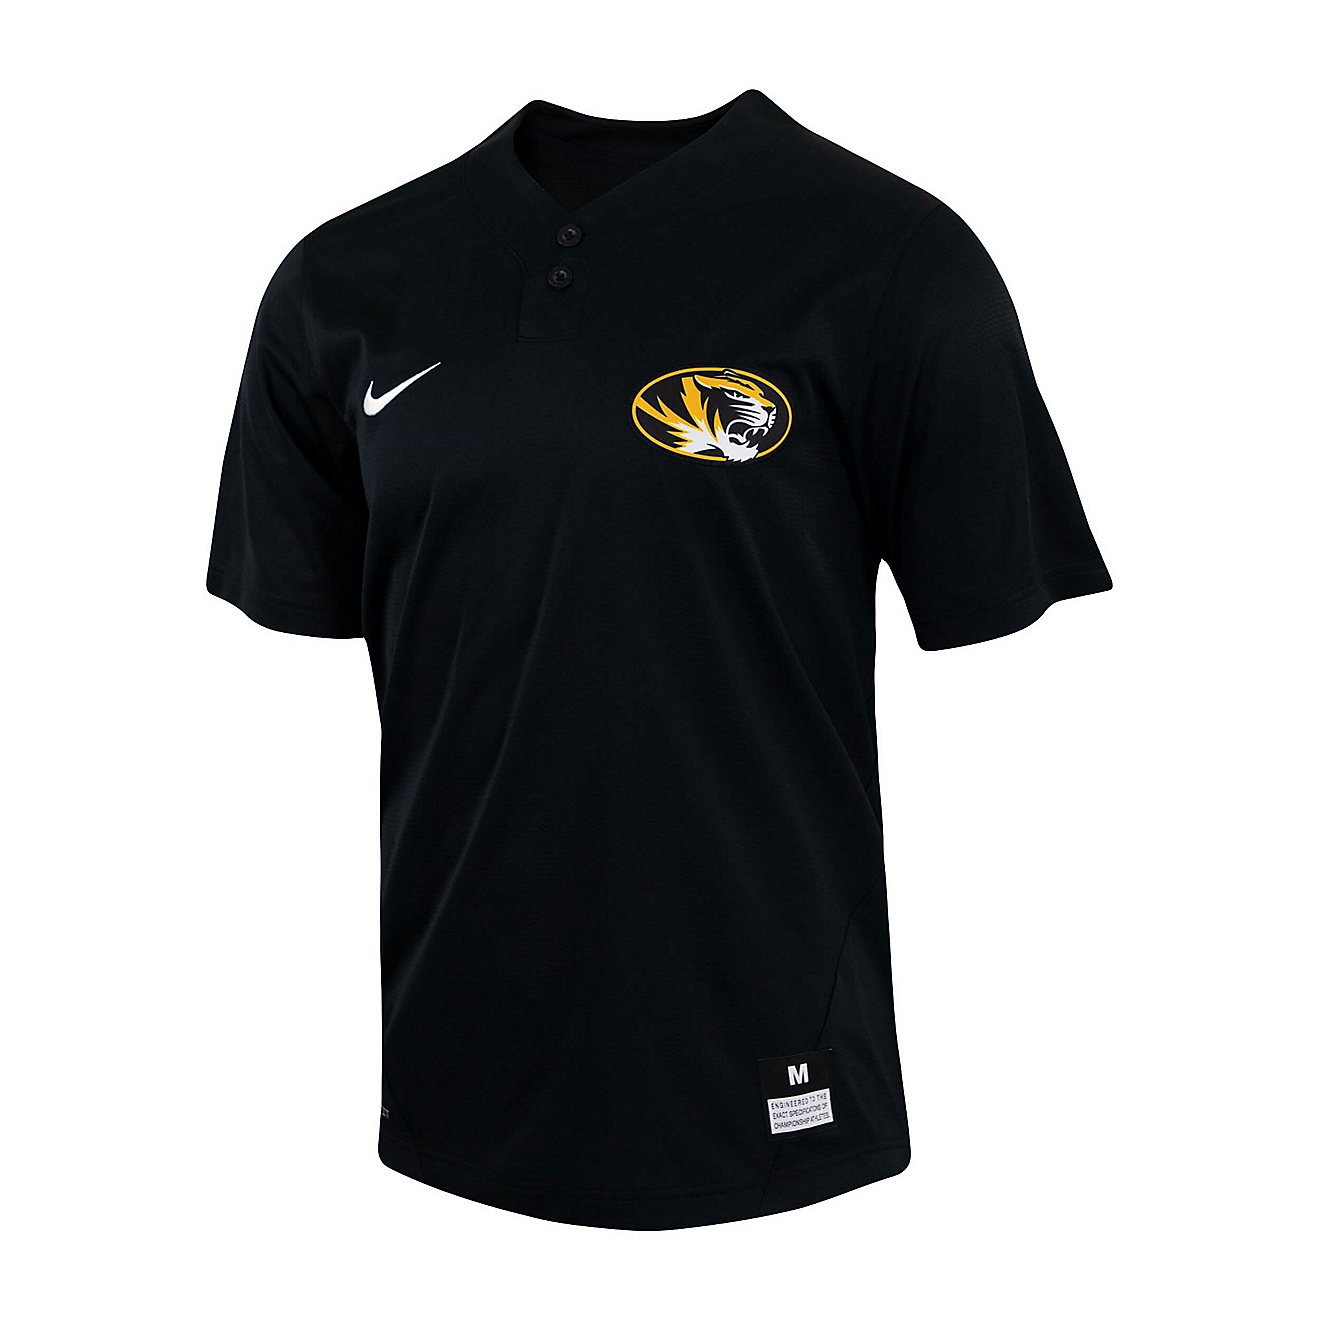 Nike Missouri Tigers Two-Button Replica Baseball Jersey | Academy